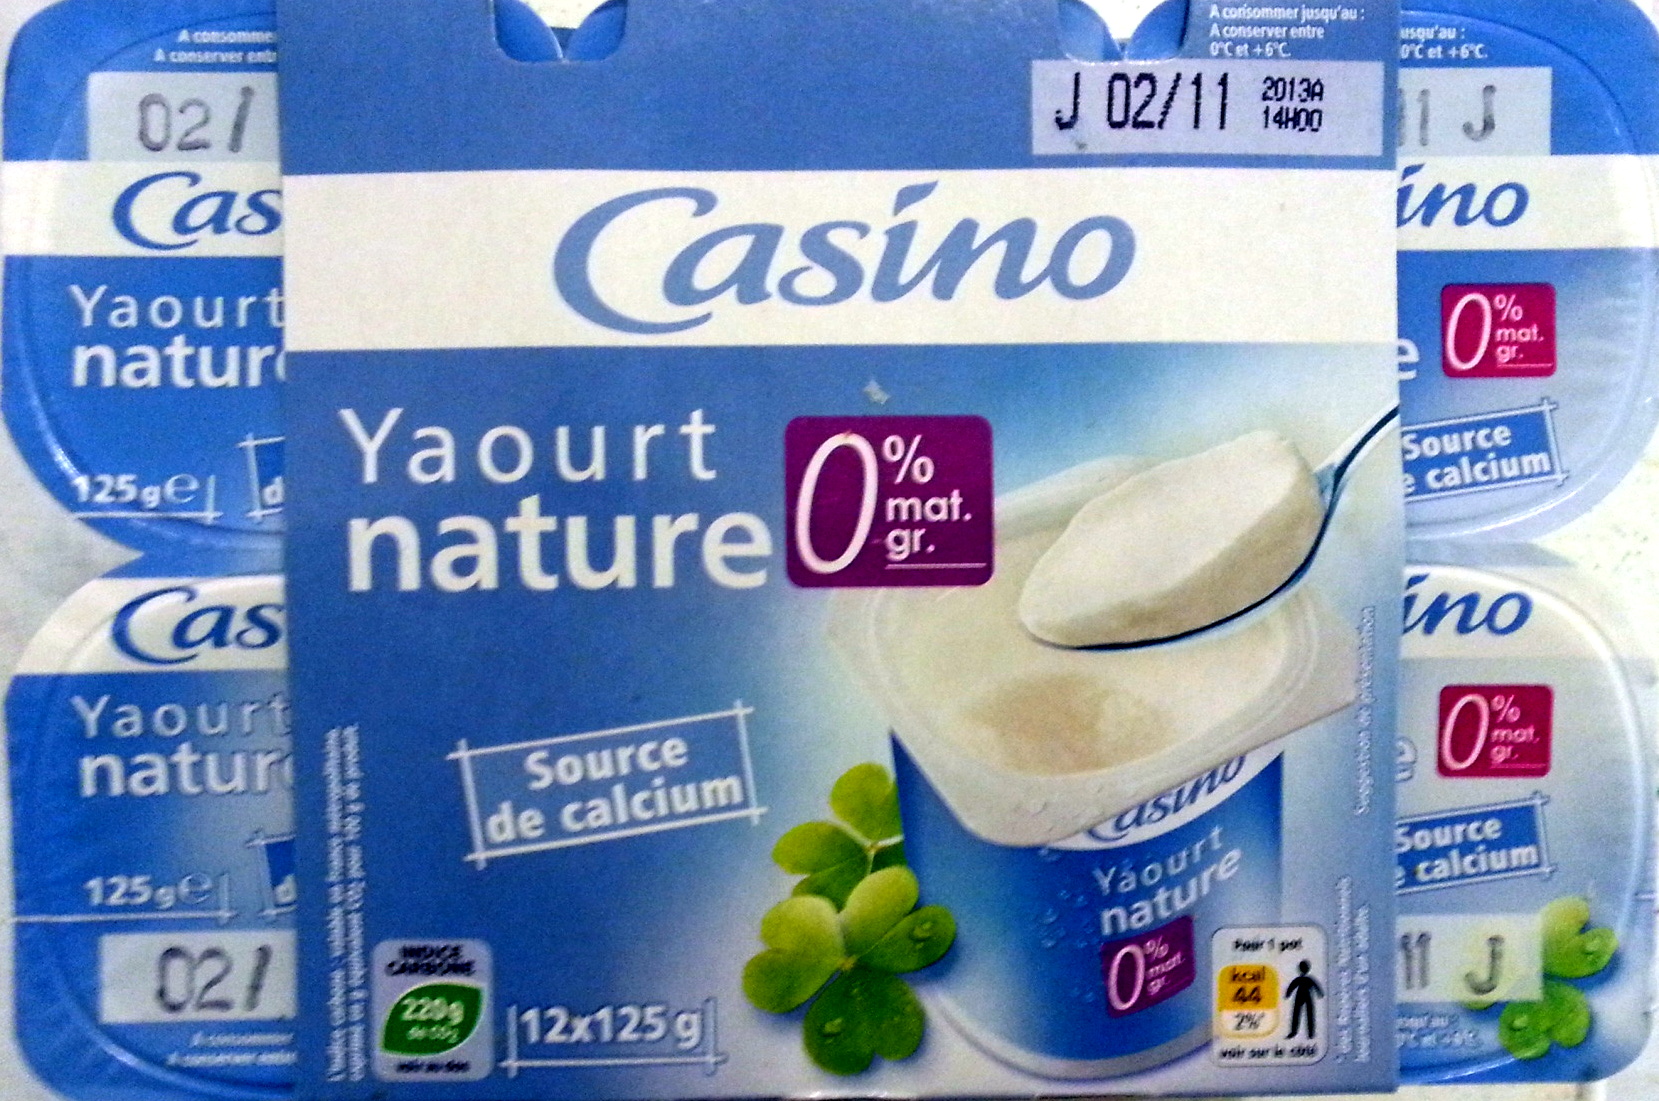 Yaourt nature 0% mat. gr - Product - fr